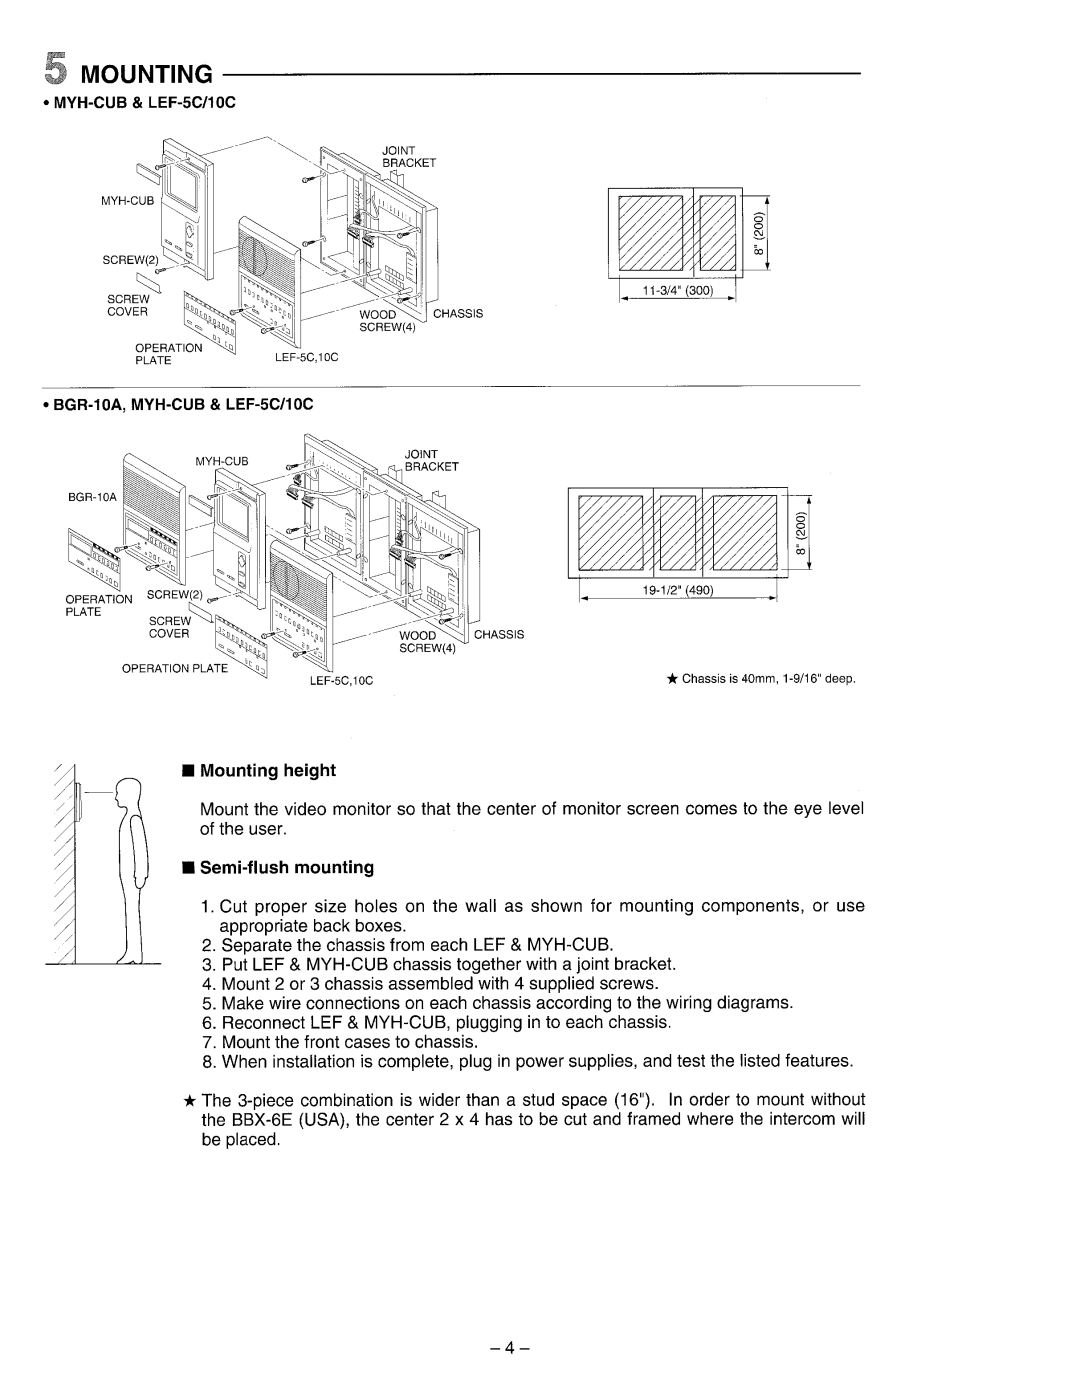 Aiphone Myh-Cub manual 